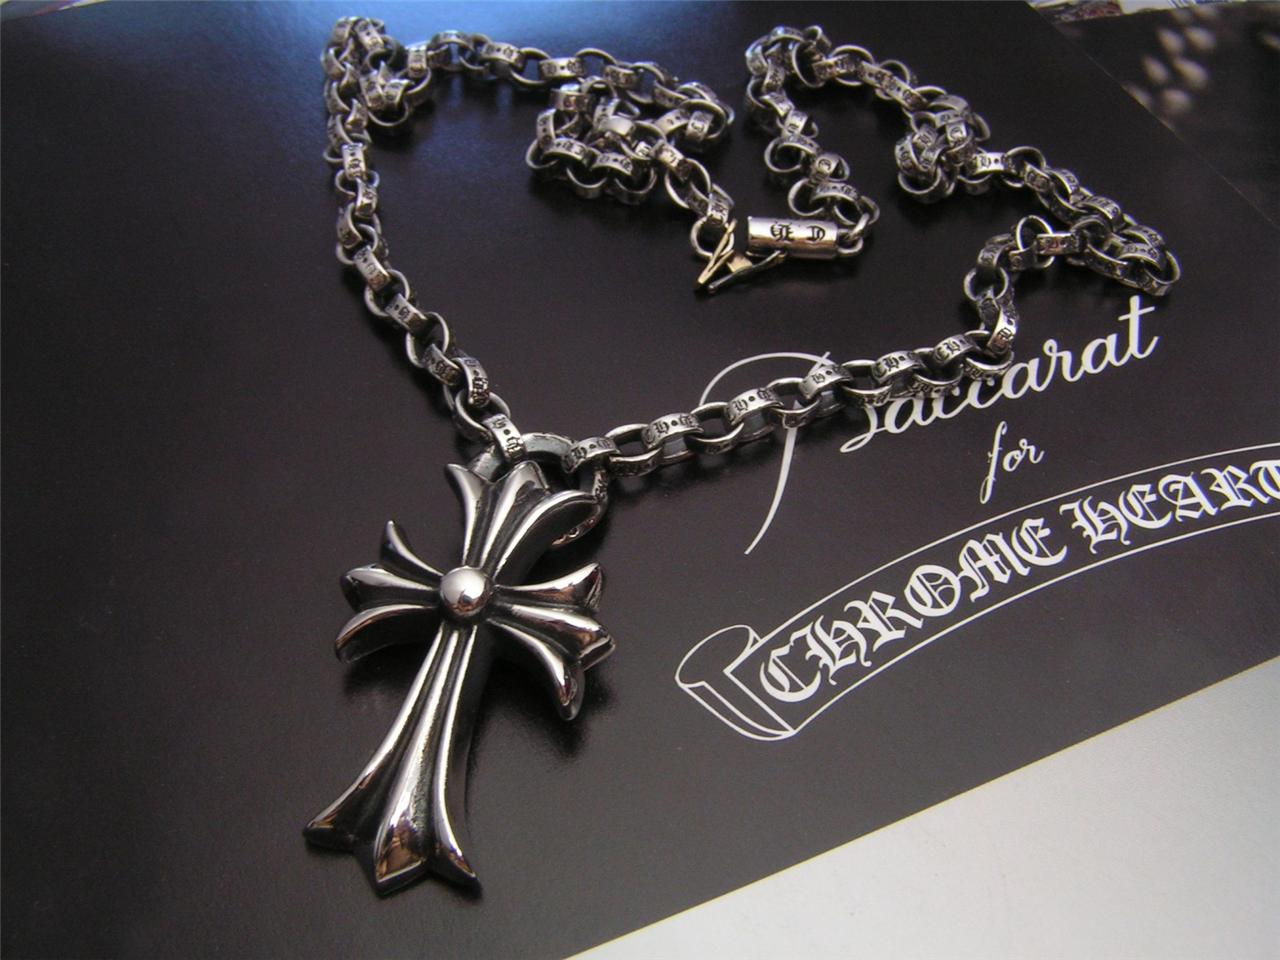 Genuine Chrome Hearts Necklace | eBay